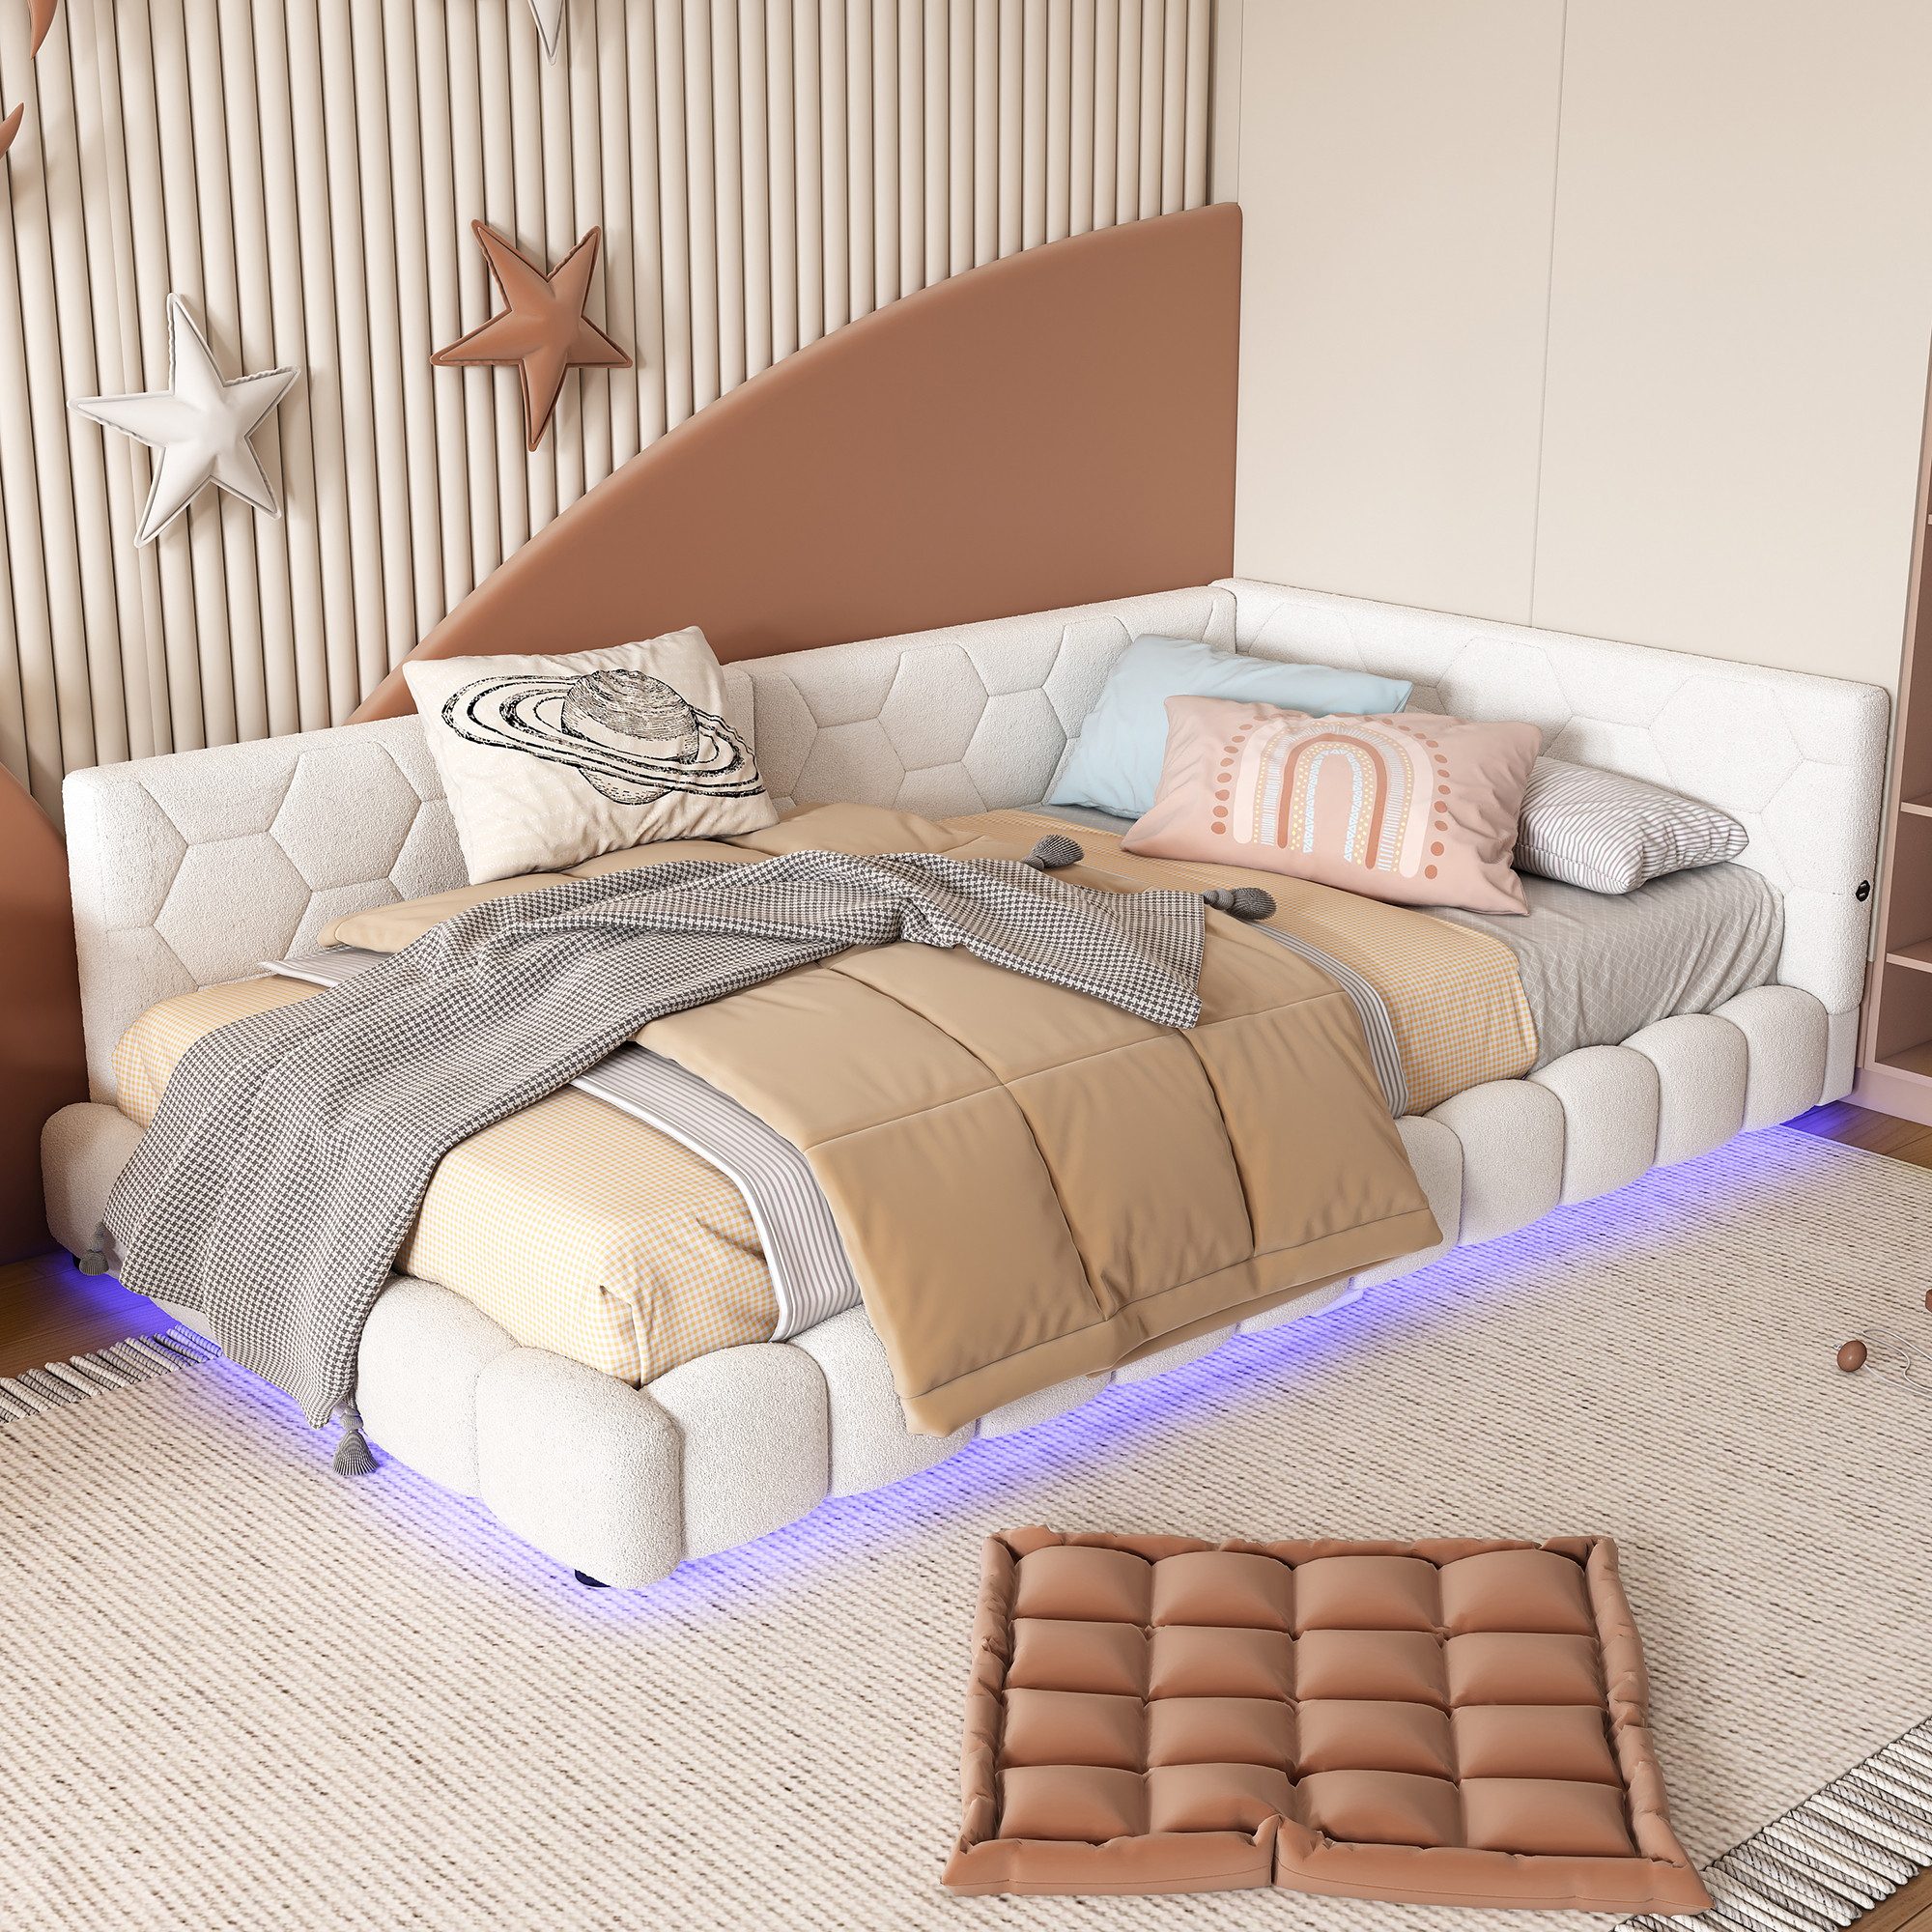 OKWISH Schlafsofa Kinderbett,16 Farben Umgebungslicht, USB-Anschluss, Bequemes Material, 90x200cm, ohne Matratze